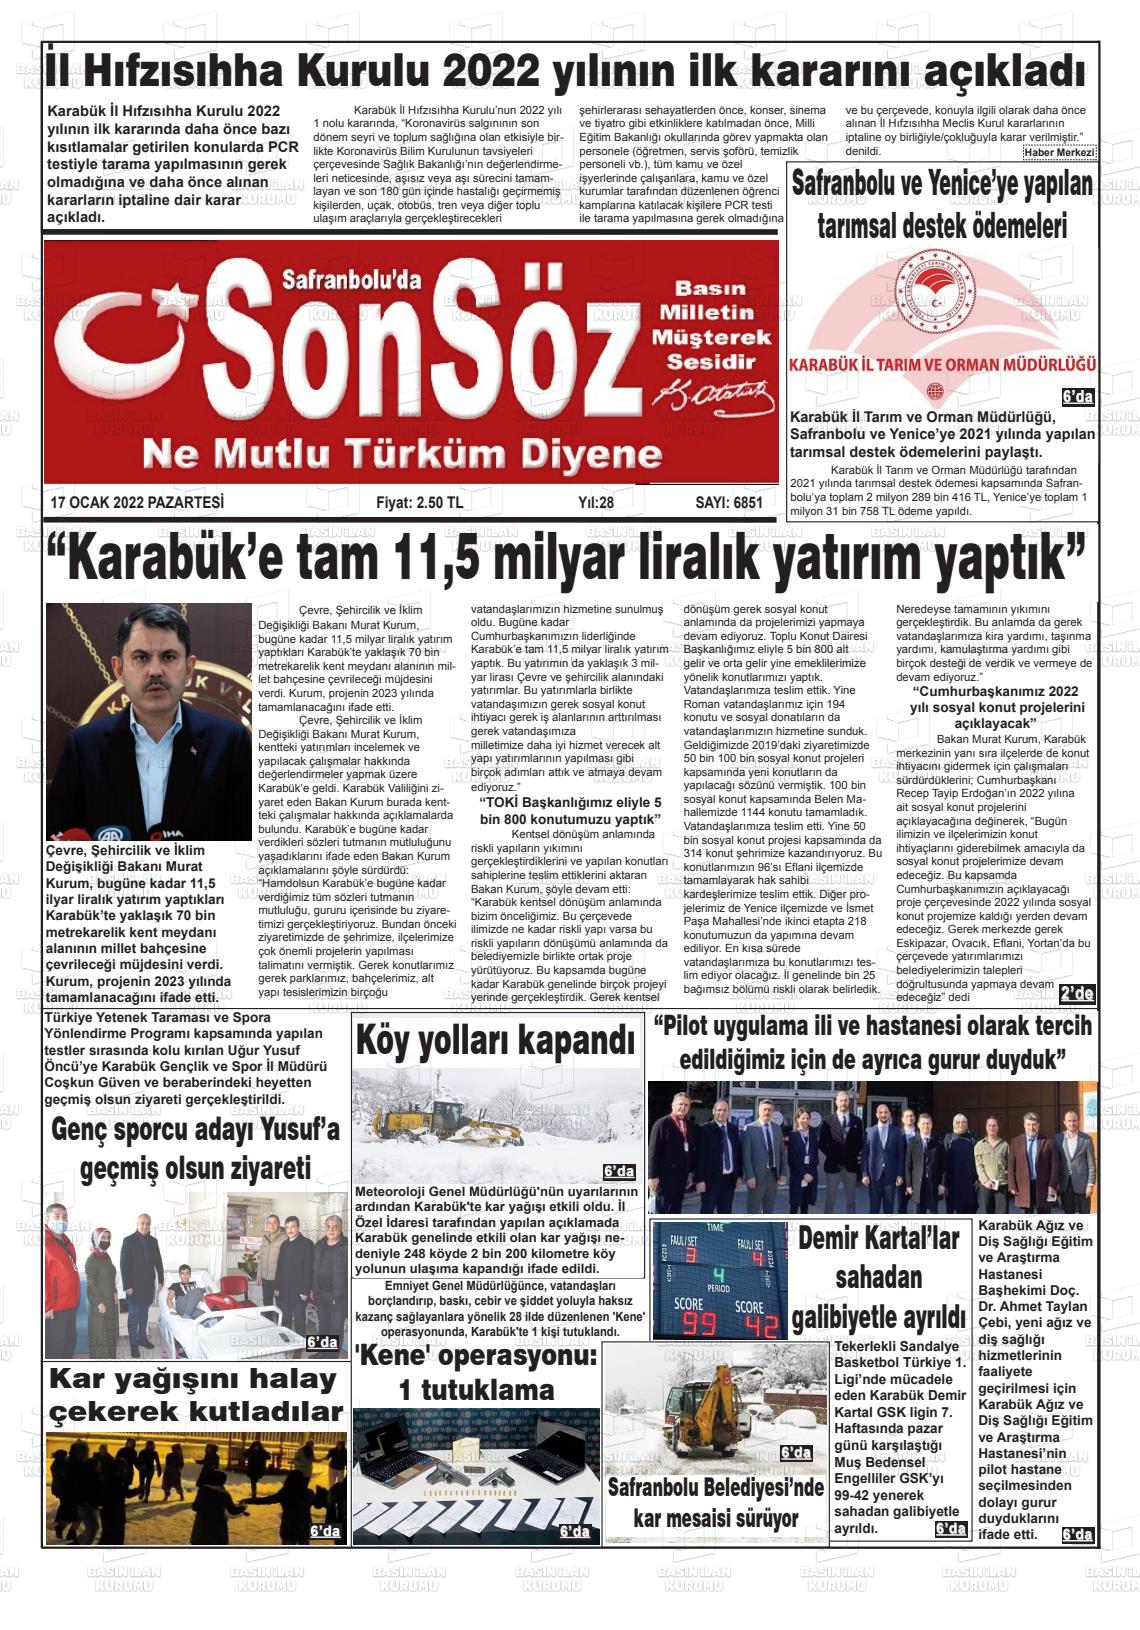 17 Ocak 2022 Safranboluda Sonsöz Gazete Manşeti